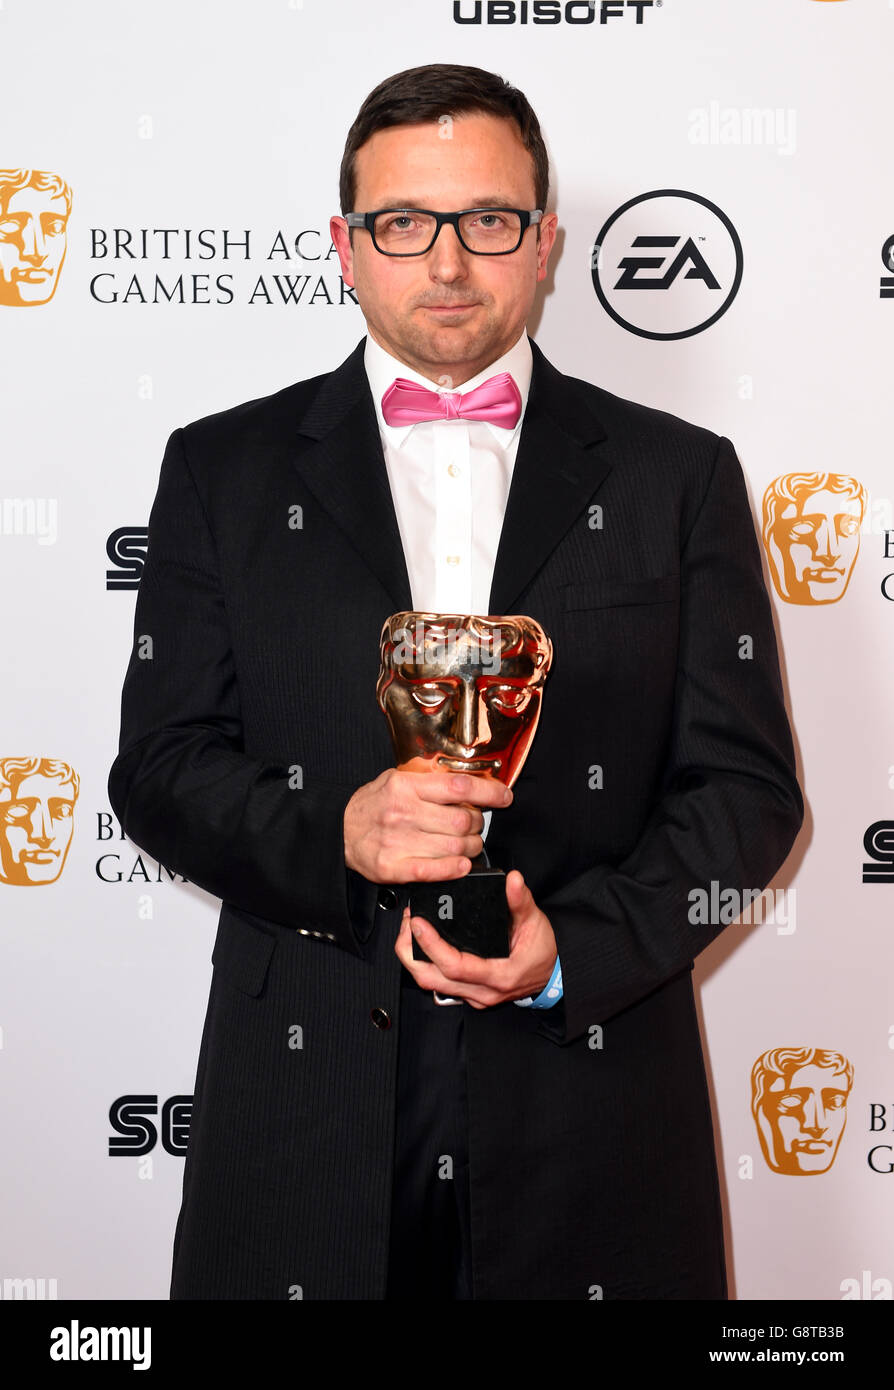 Games Awards Ceremony 2016